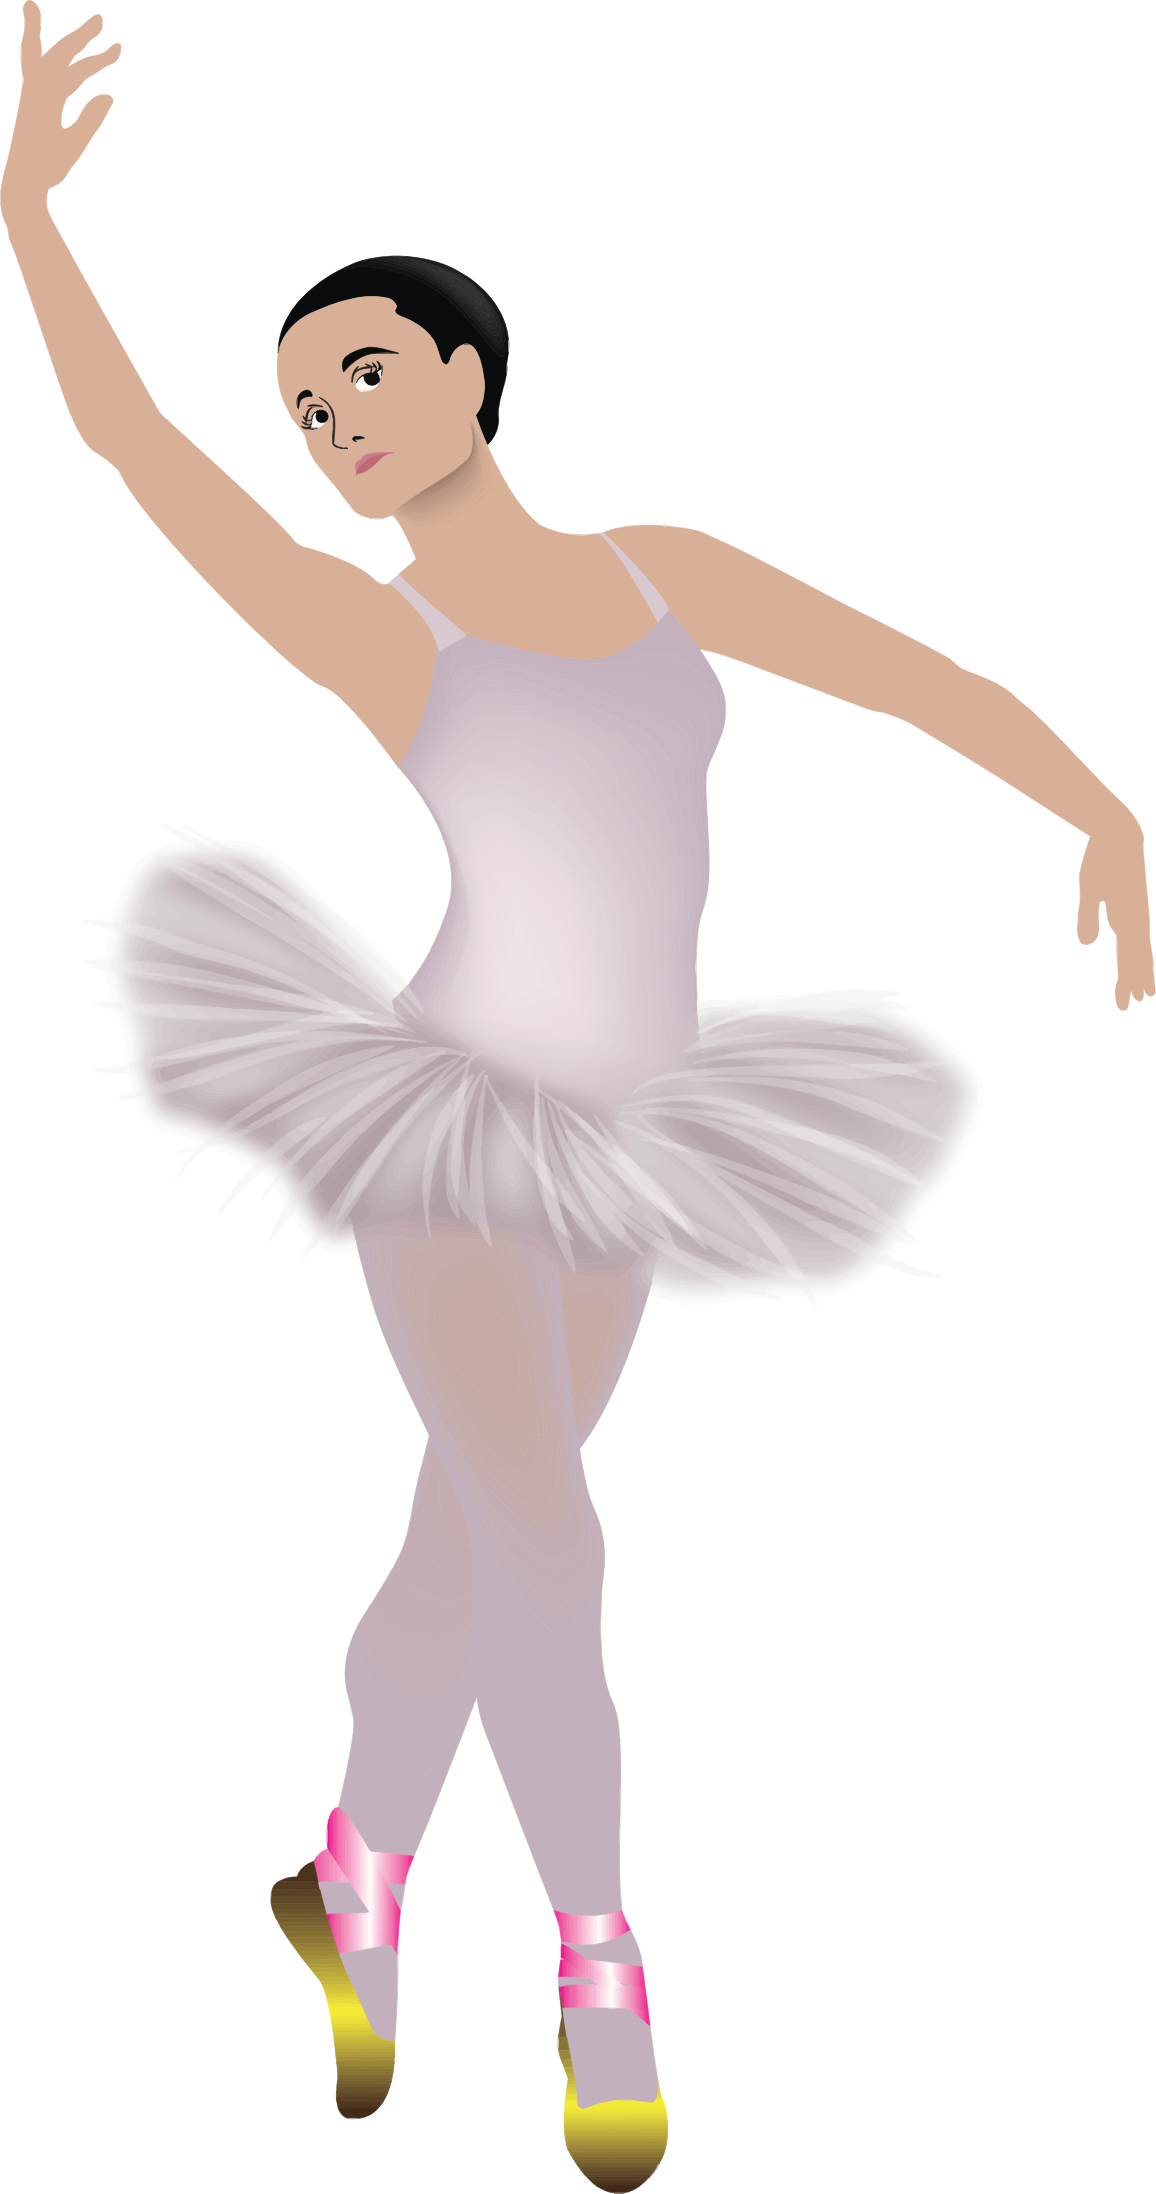 Big Image - Ballerina Silhouette (1156x2194)